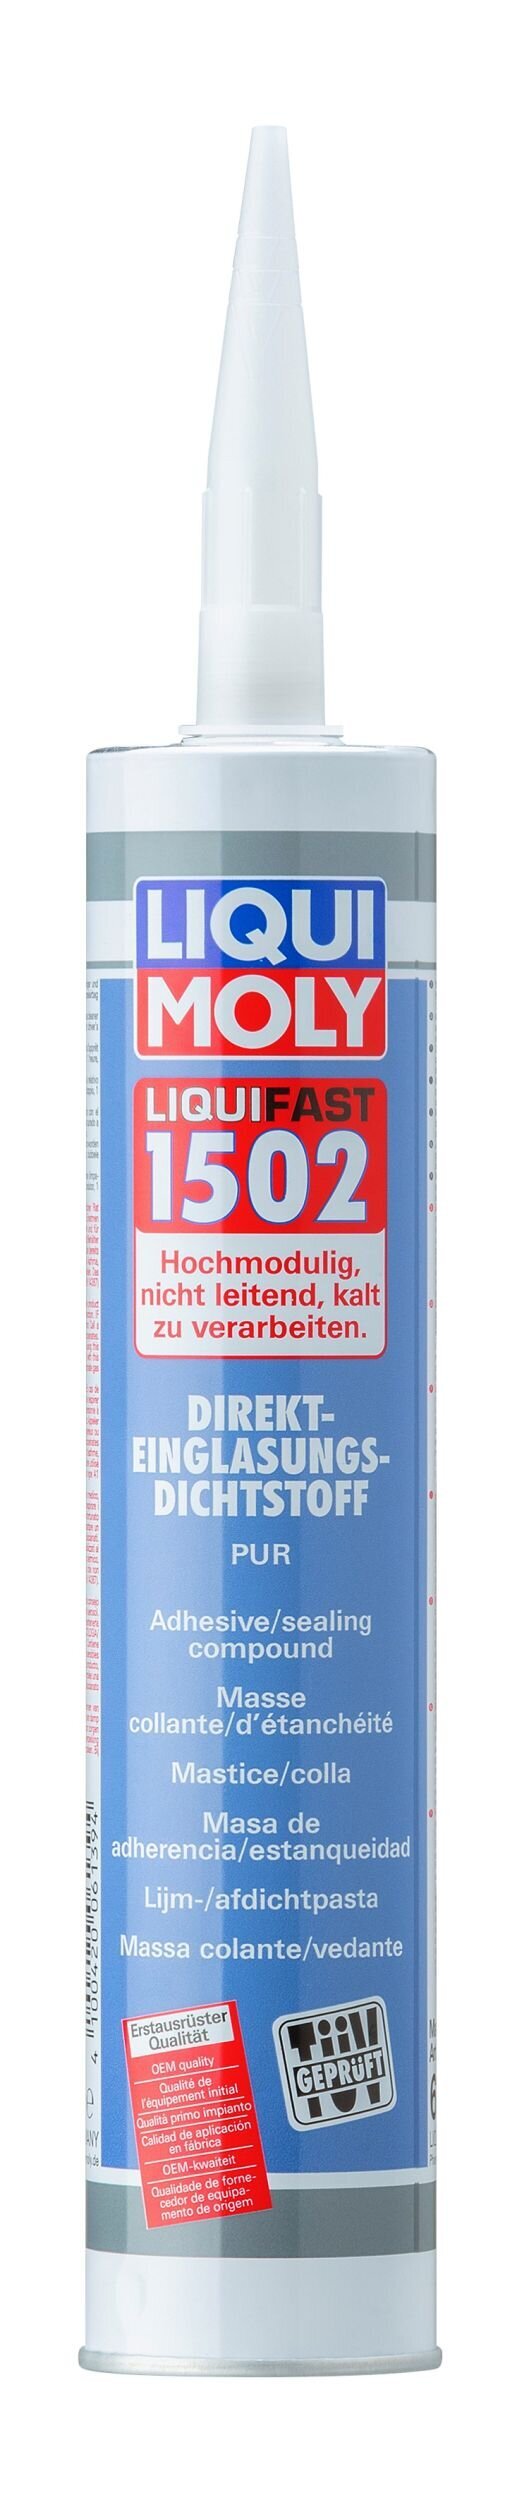 Scheibenklebstoff LIQUI MOLY 6139